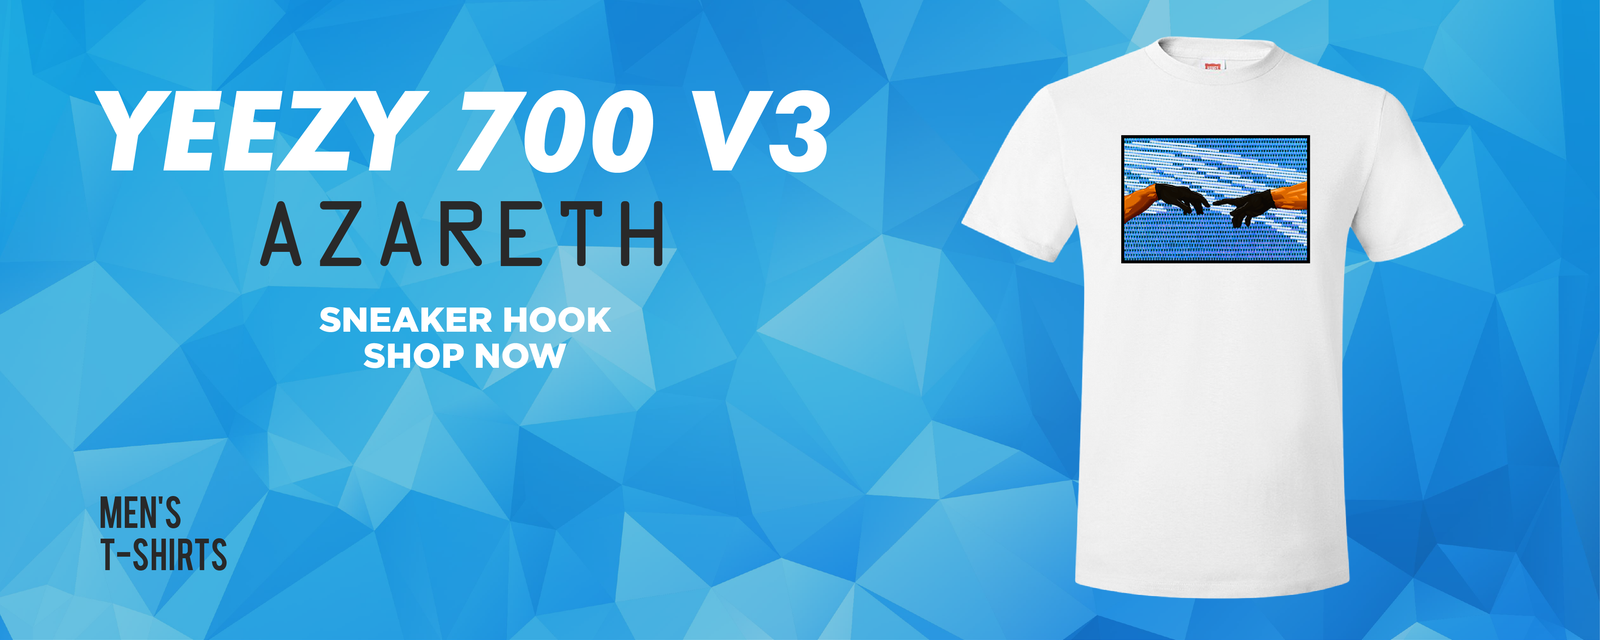 shirts to match yeezy 700